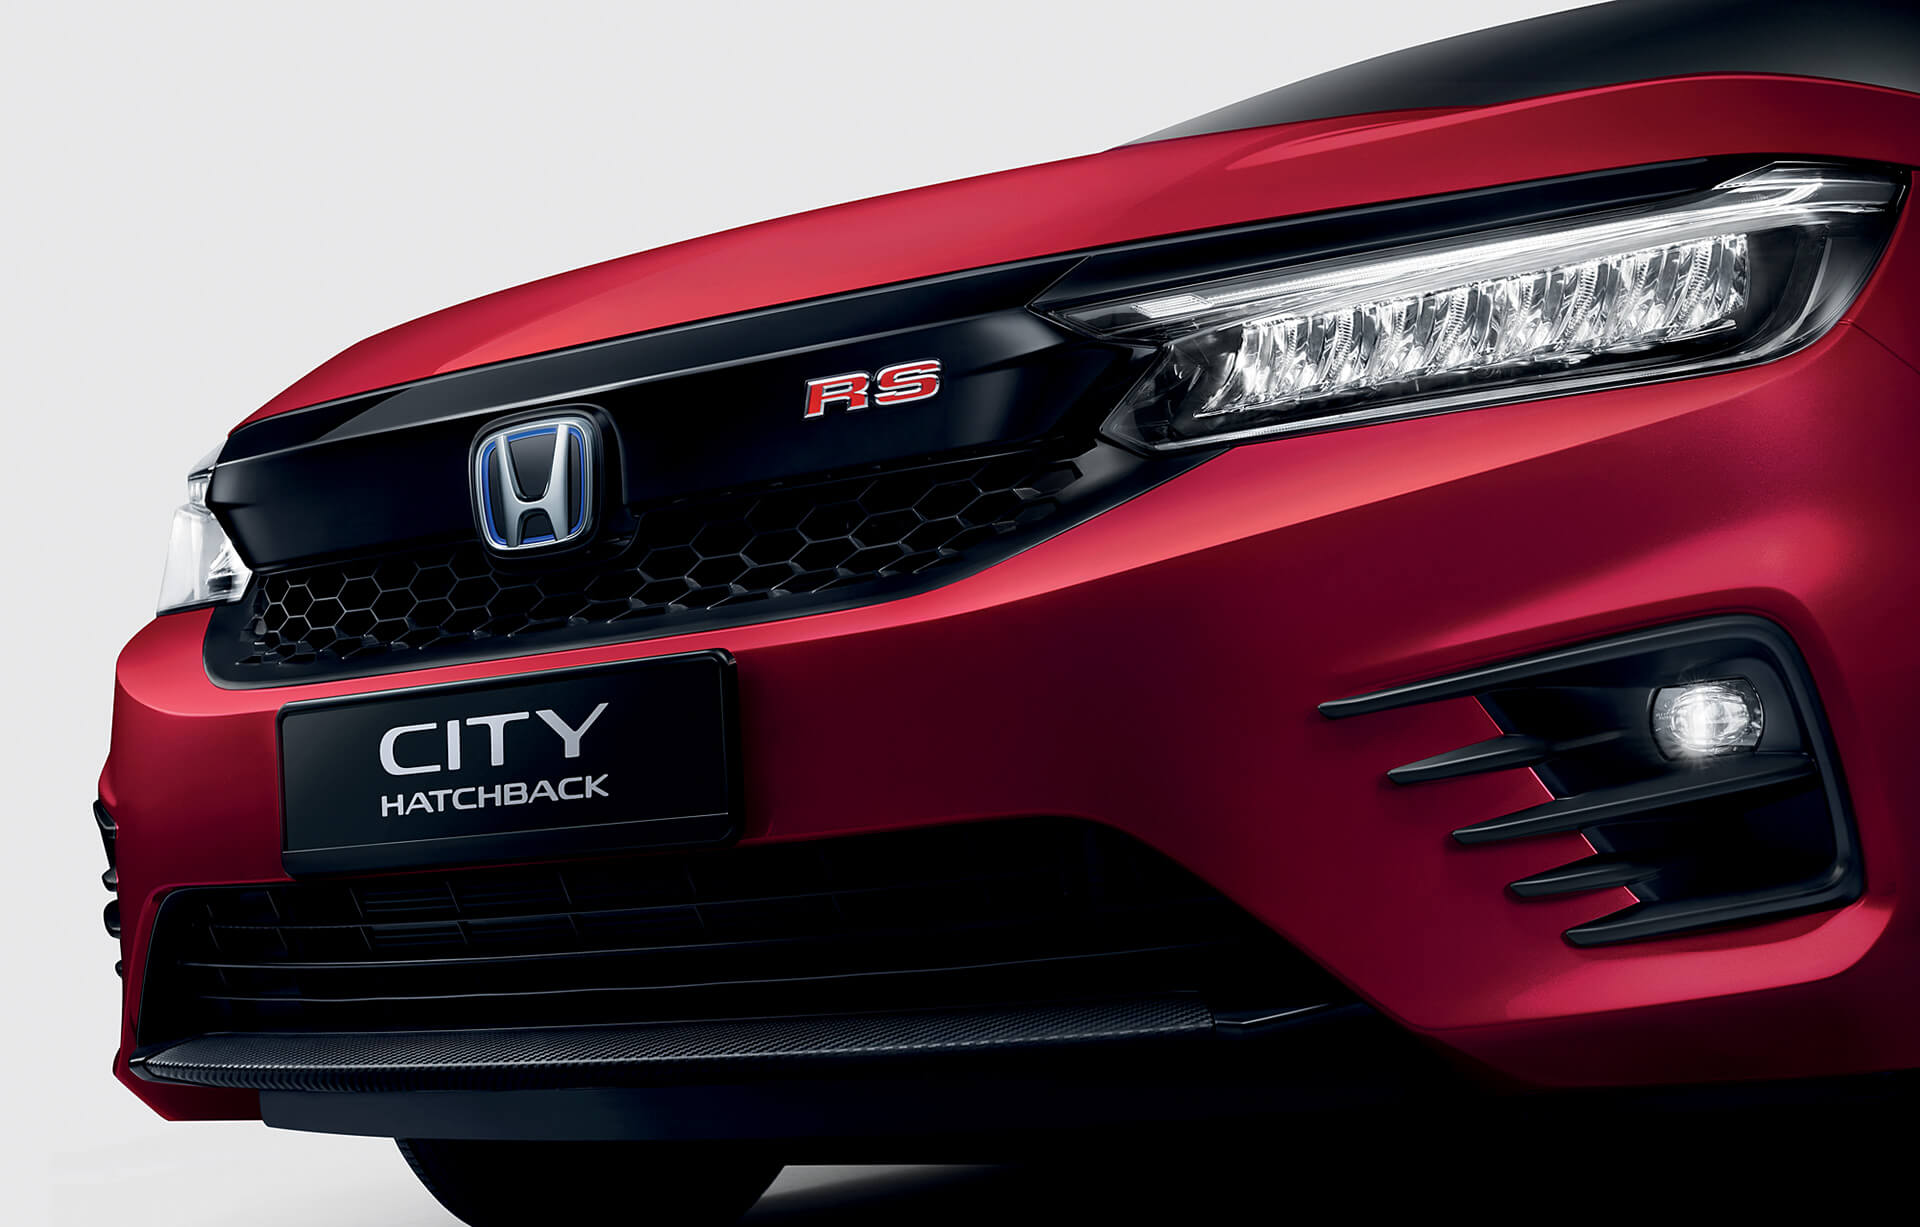 Honda city hatchback price malaysia